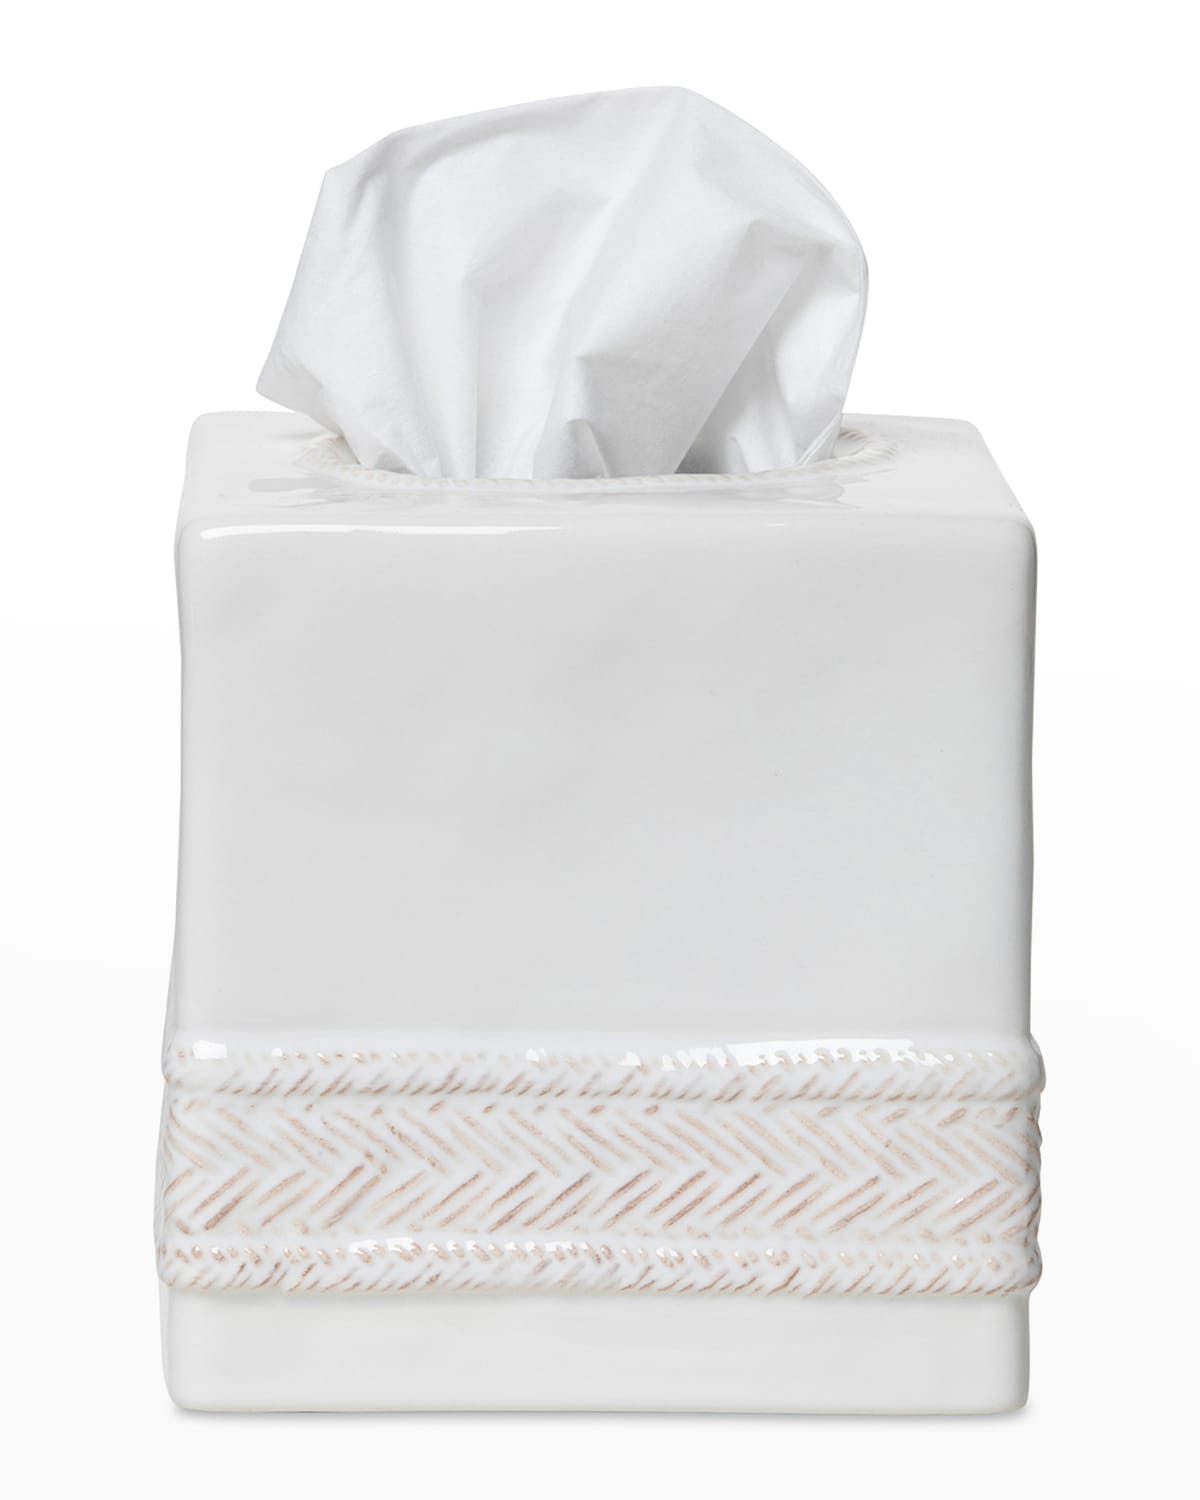 Juliska Le Panier Whitewash Tissue Box Cover